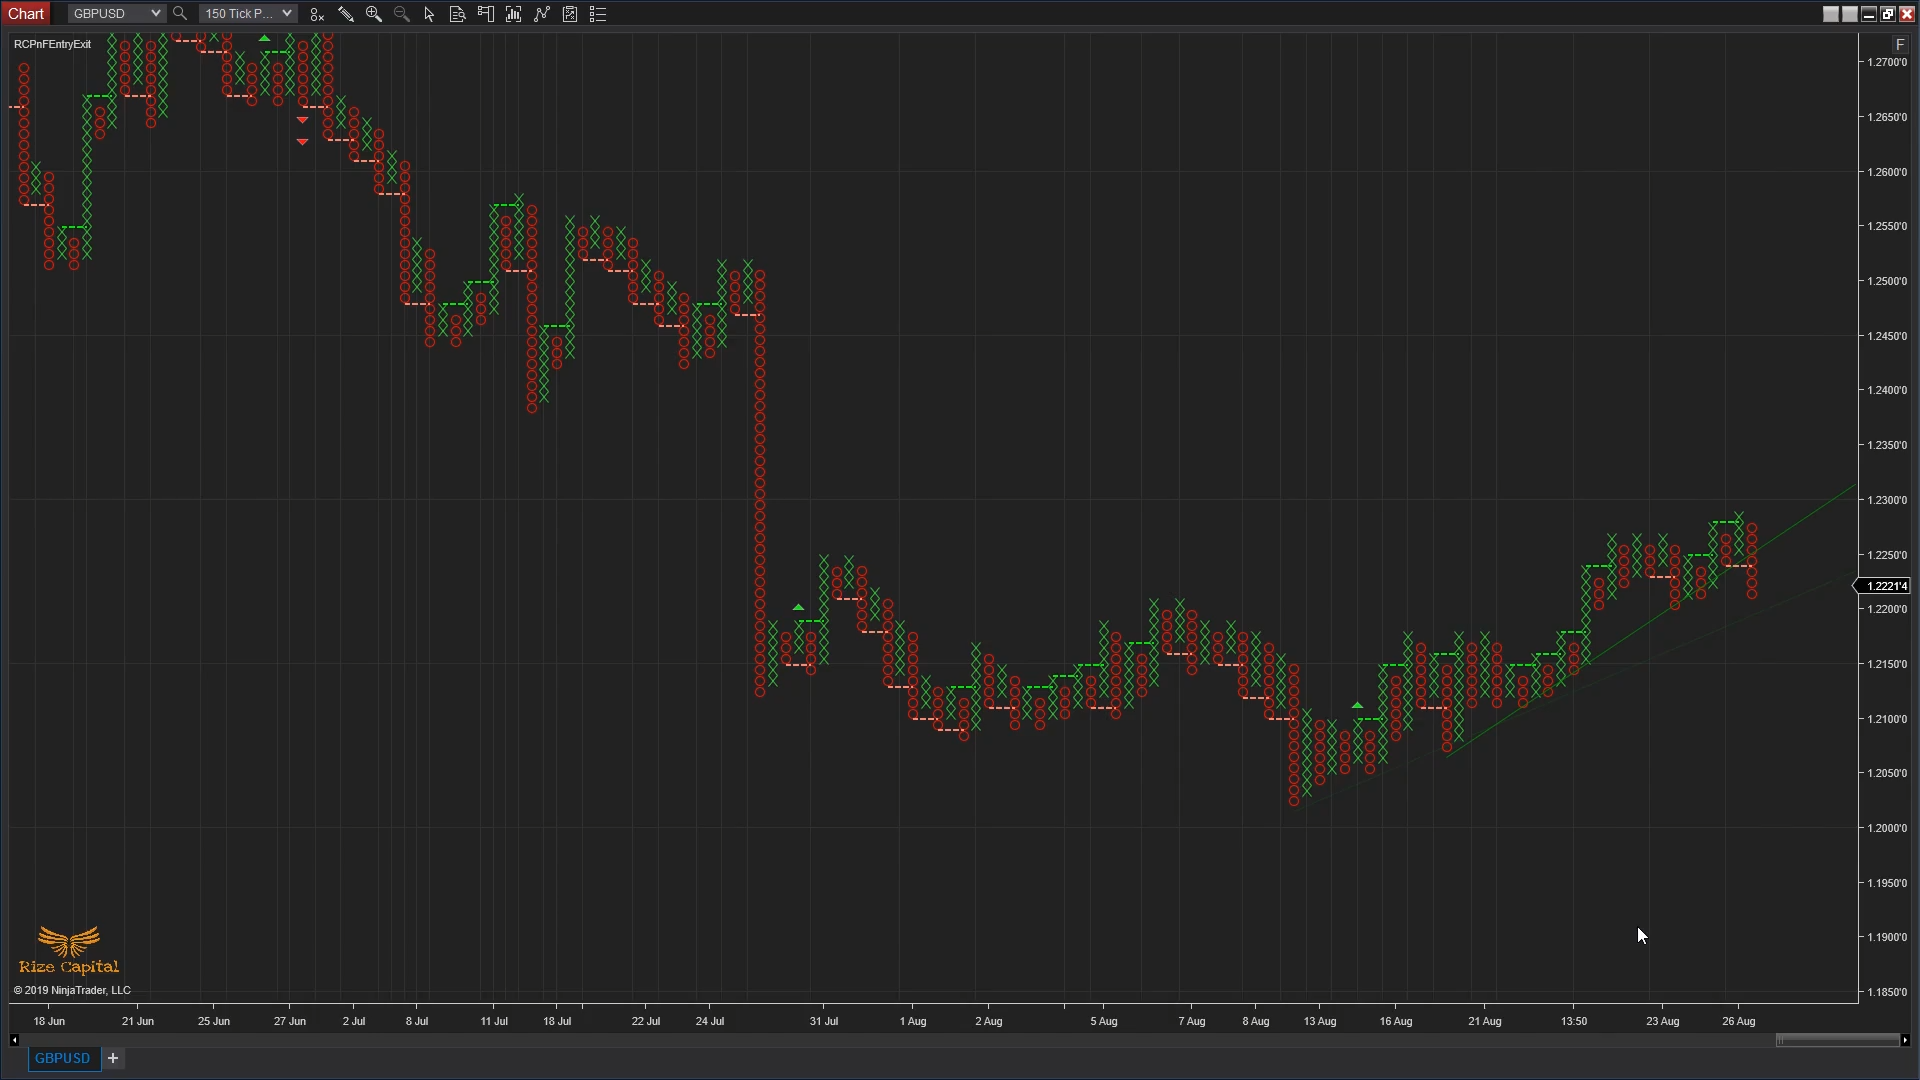 NinjaTrader 8 | Custom Trading Indicator - Rize Capital